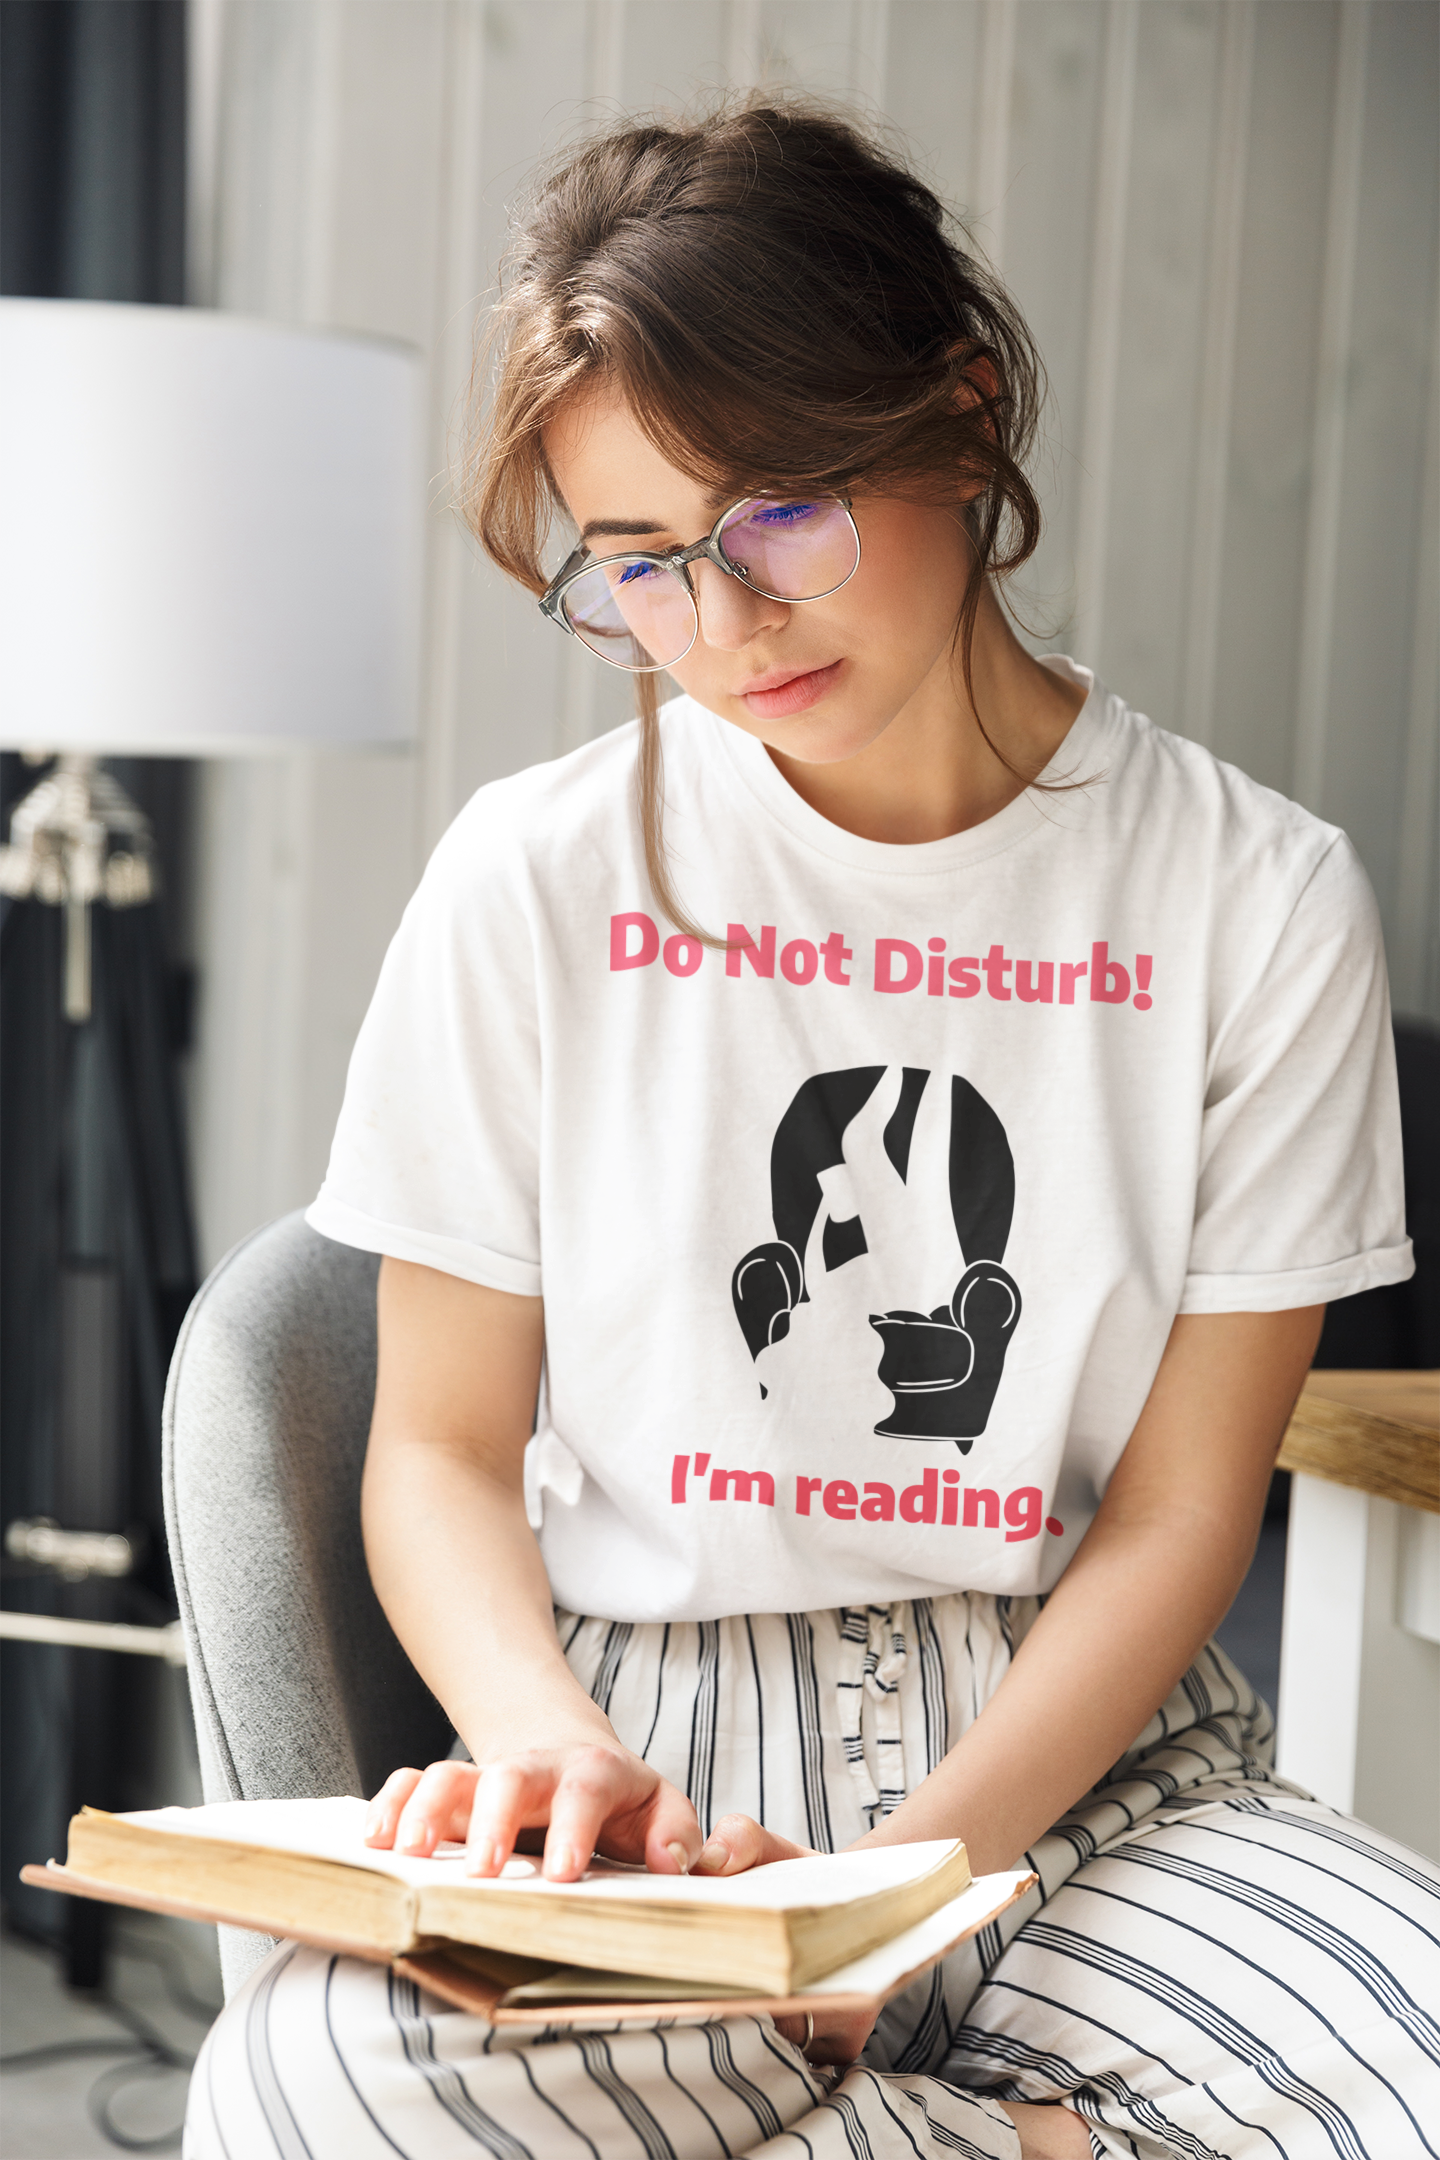 Do Not Disturb! I'm Reading Women's T-shirt